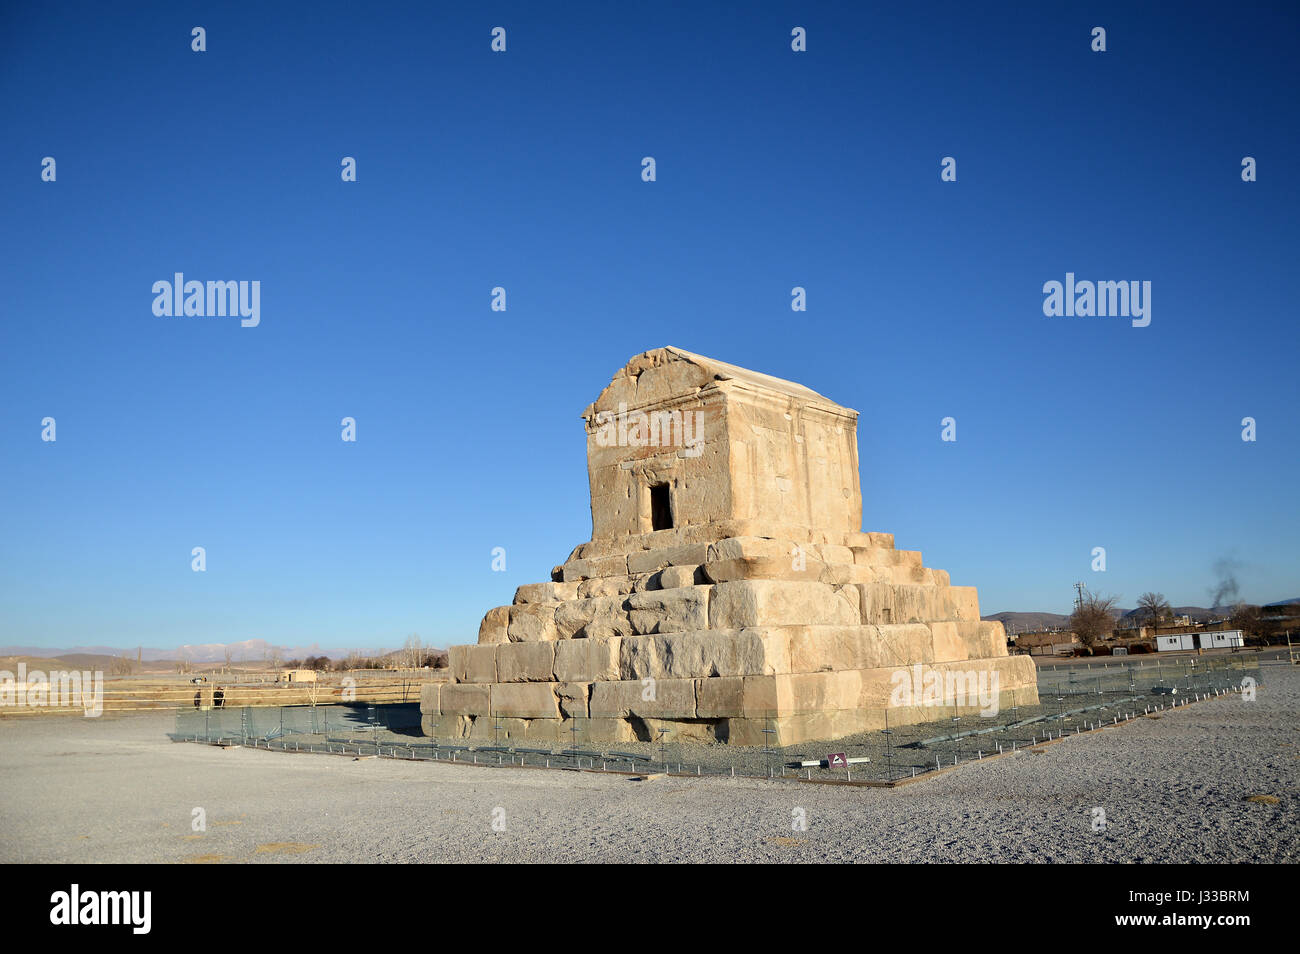 The tomb of Cyrus the Great, Pasargadae, Iran - Pasargadae, Iran - December 2015 Stock Photo